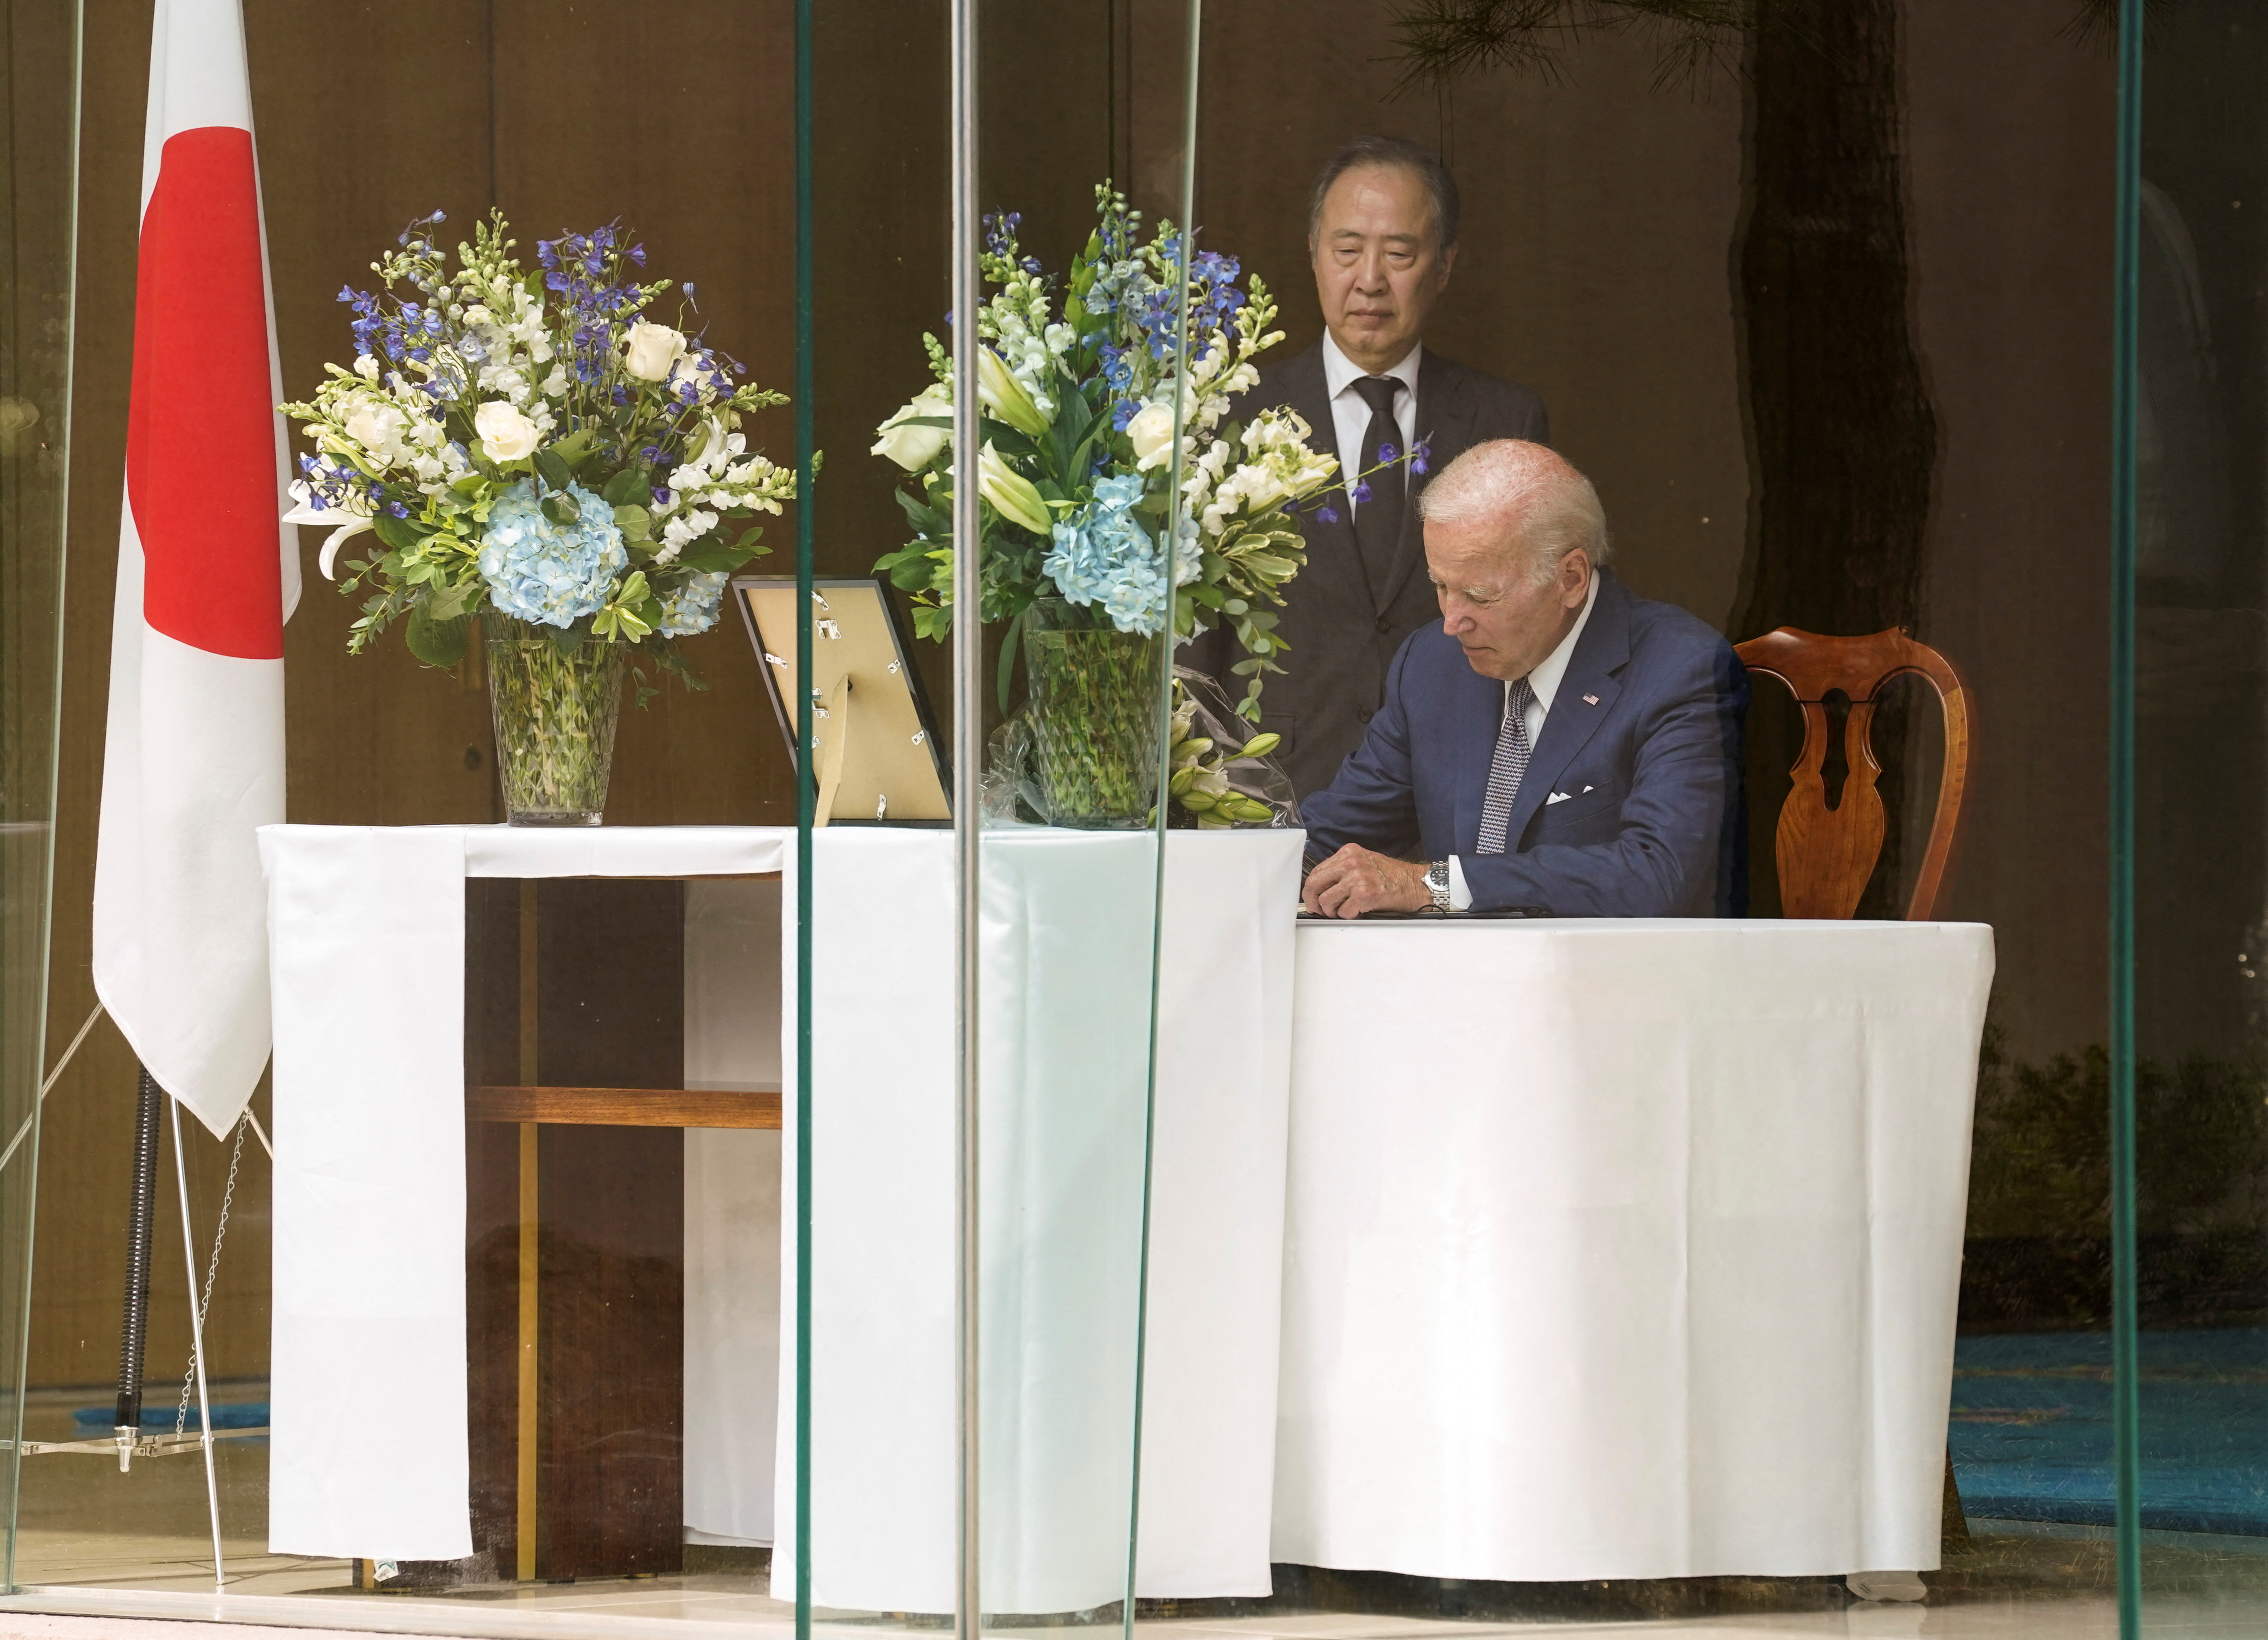 U.S. President Biden pays tribute to Japan's former Prime Minister Shinzo Abe during visit to the Japan ambassador's residence in Washington